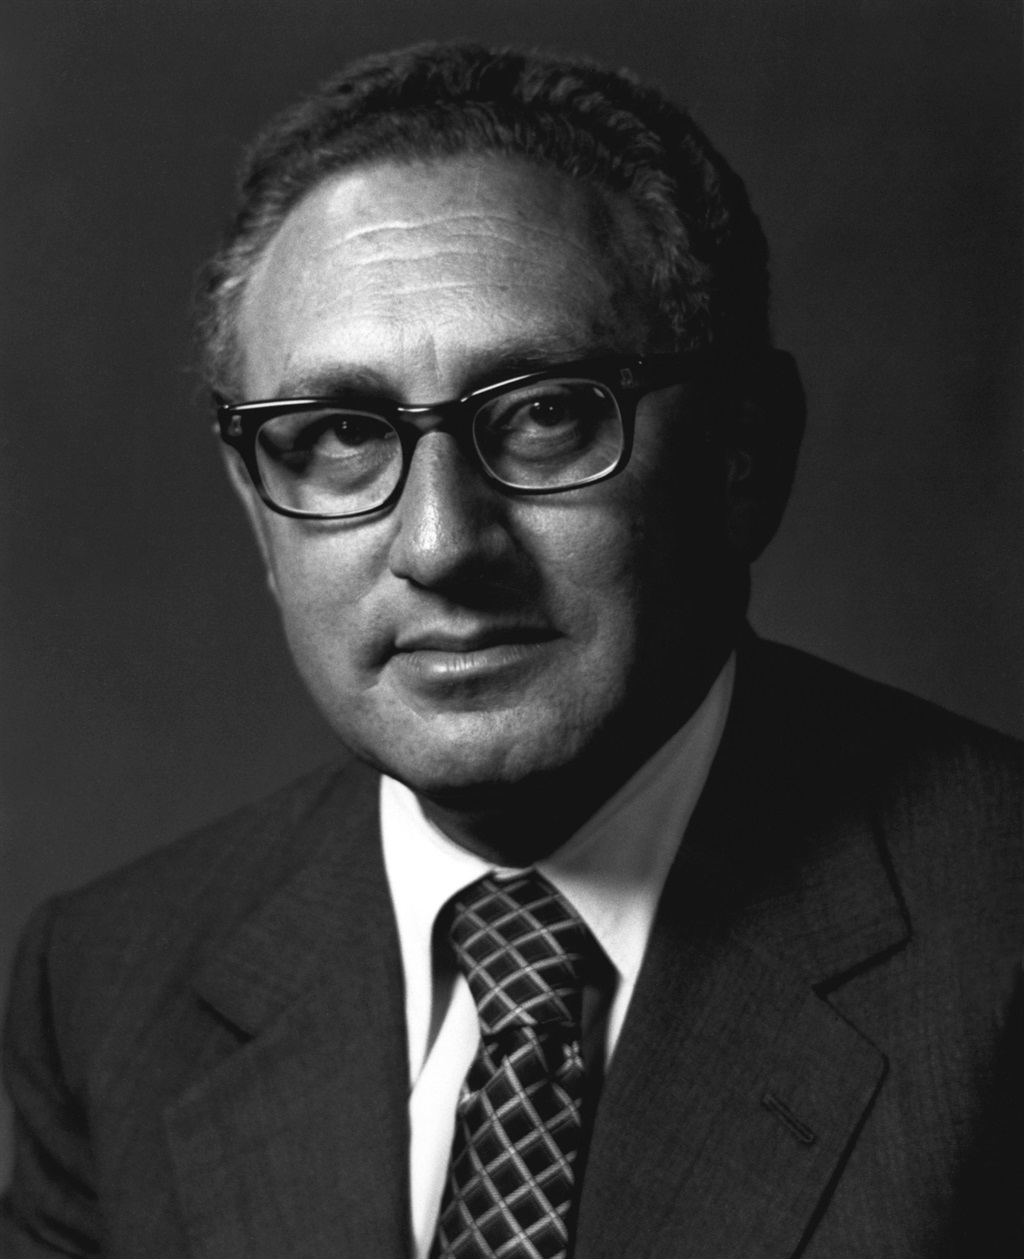 Official portrait of Henry A. Kissinger, US Secret